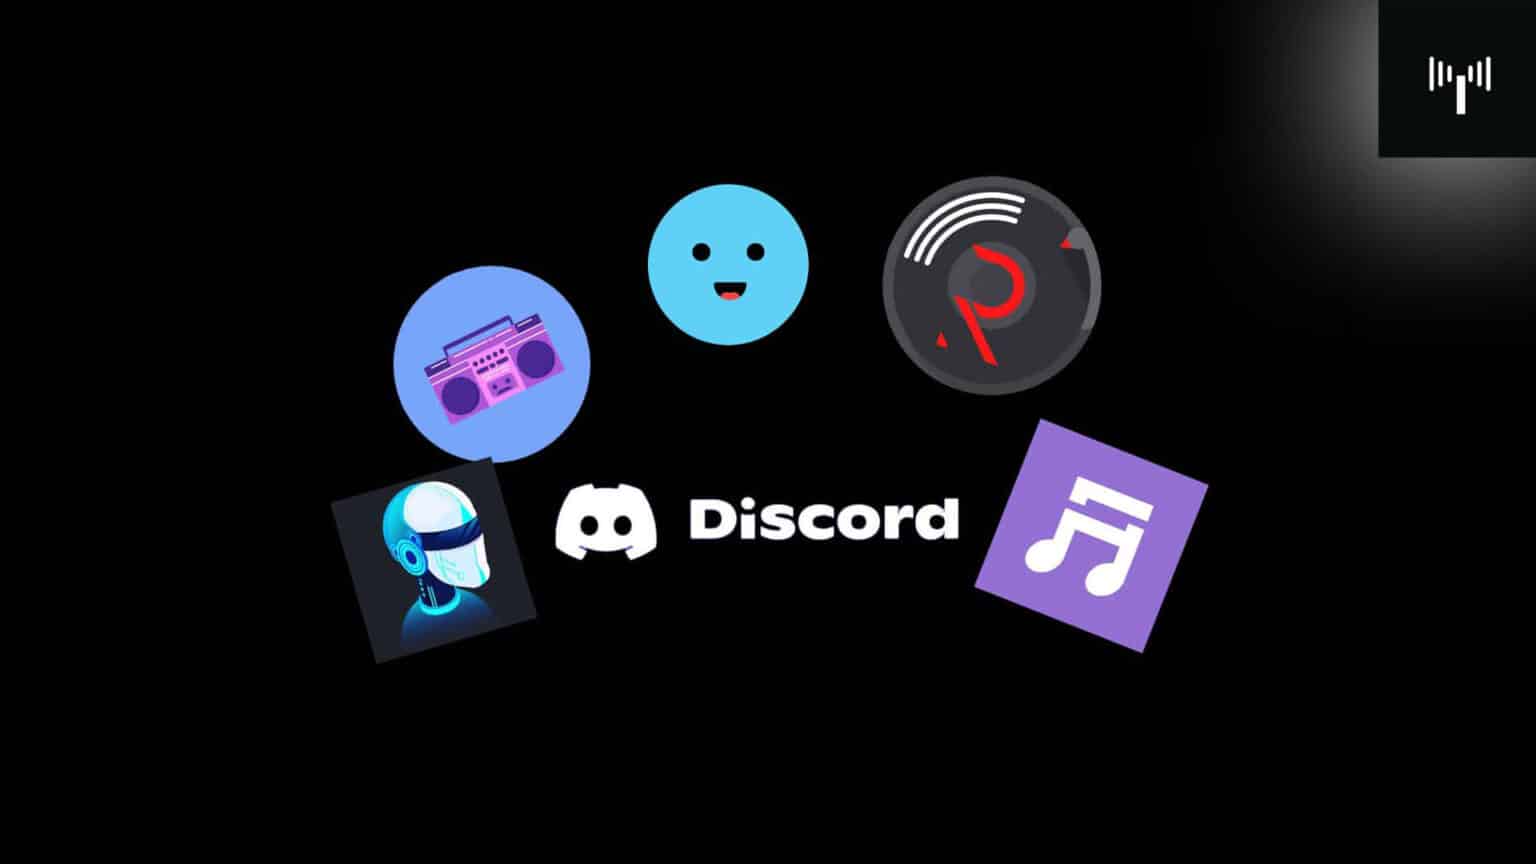 best discord apps